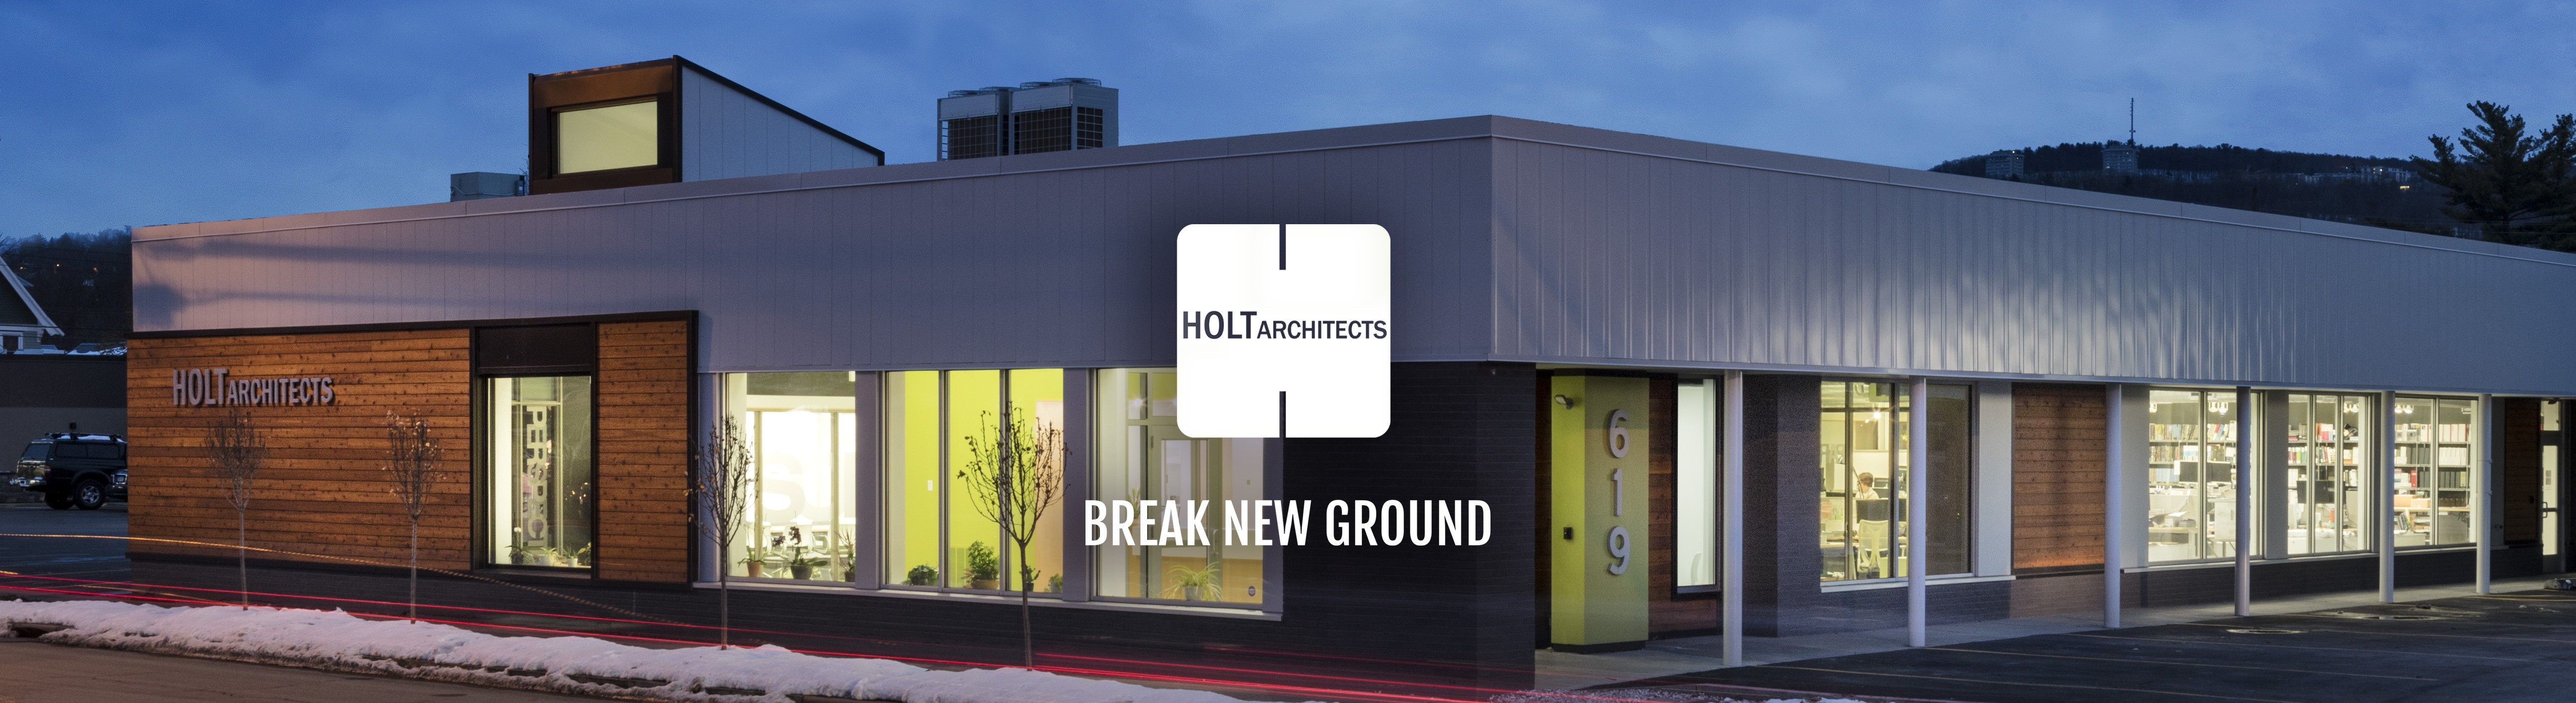 Holt Architects Break New Ground Linkedin